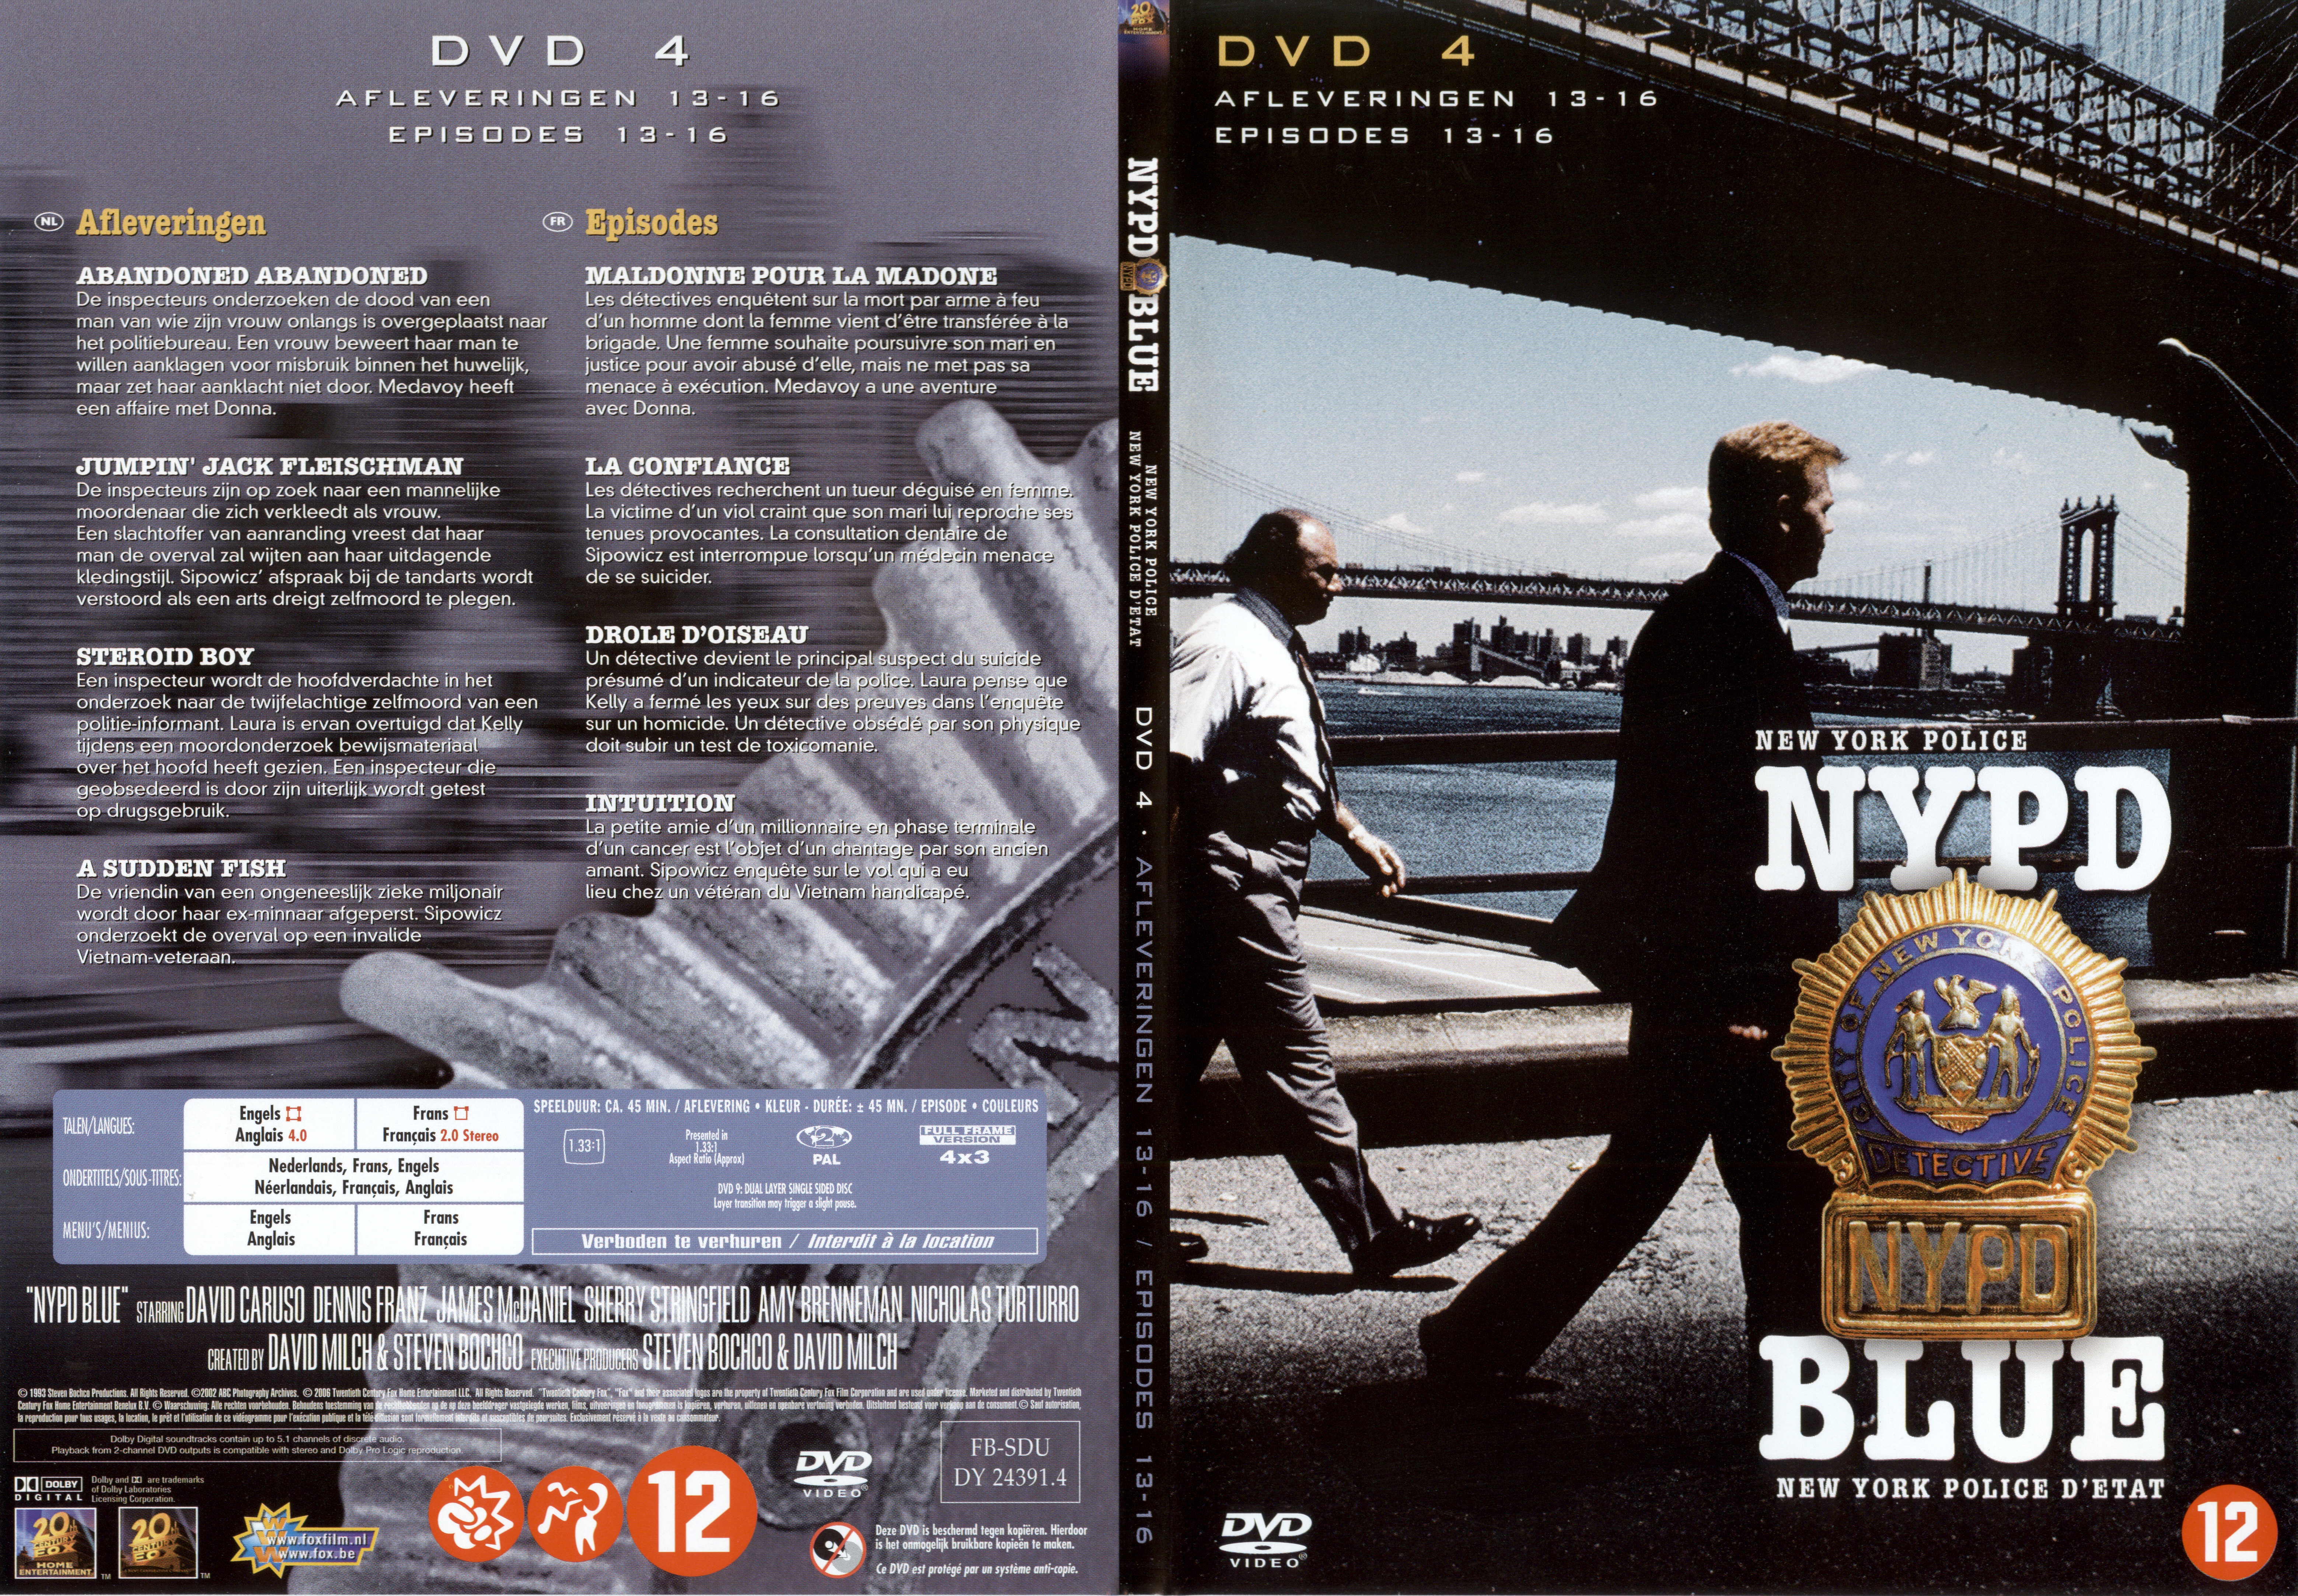 Jaquette DVD NYPD Blue saison 01 dvd 04 v2